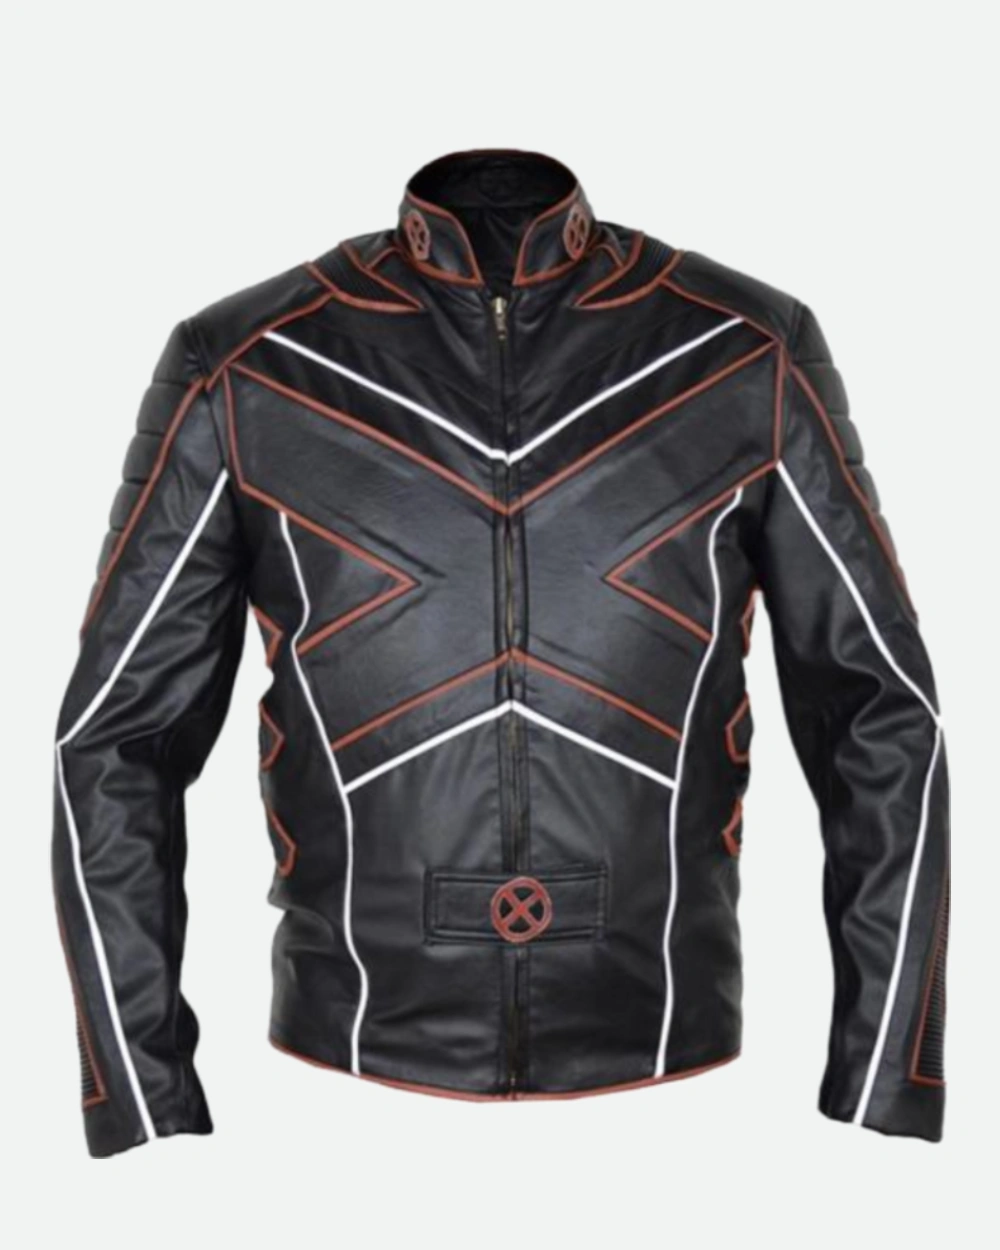 X Men 2 United Wolverine Motorcycle Jacket